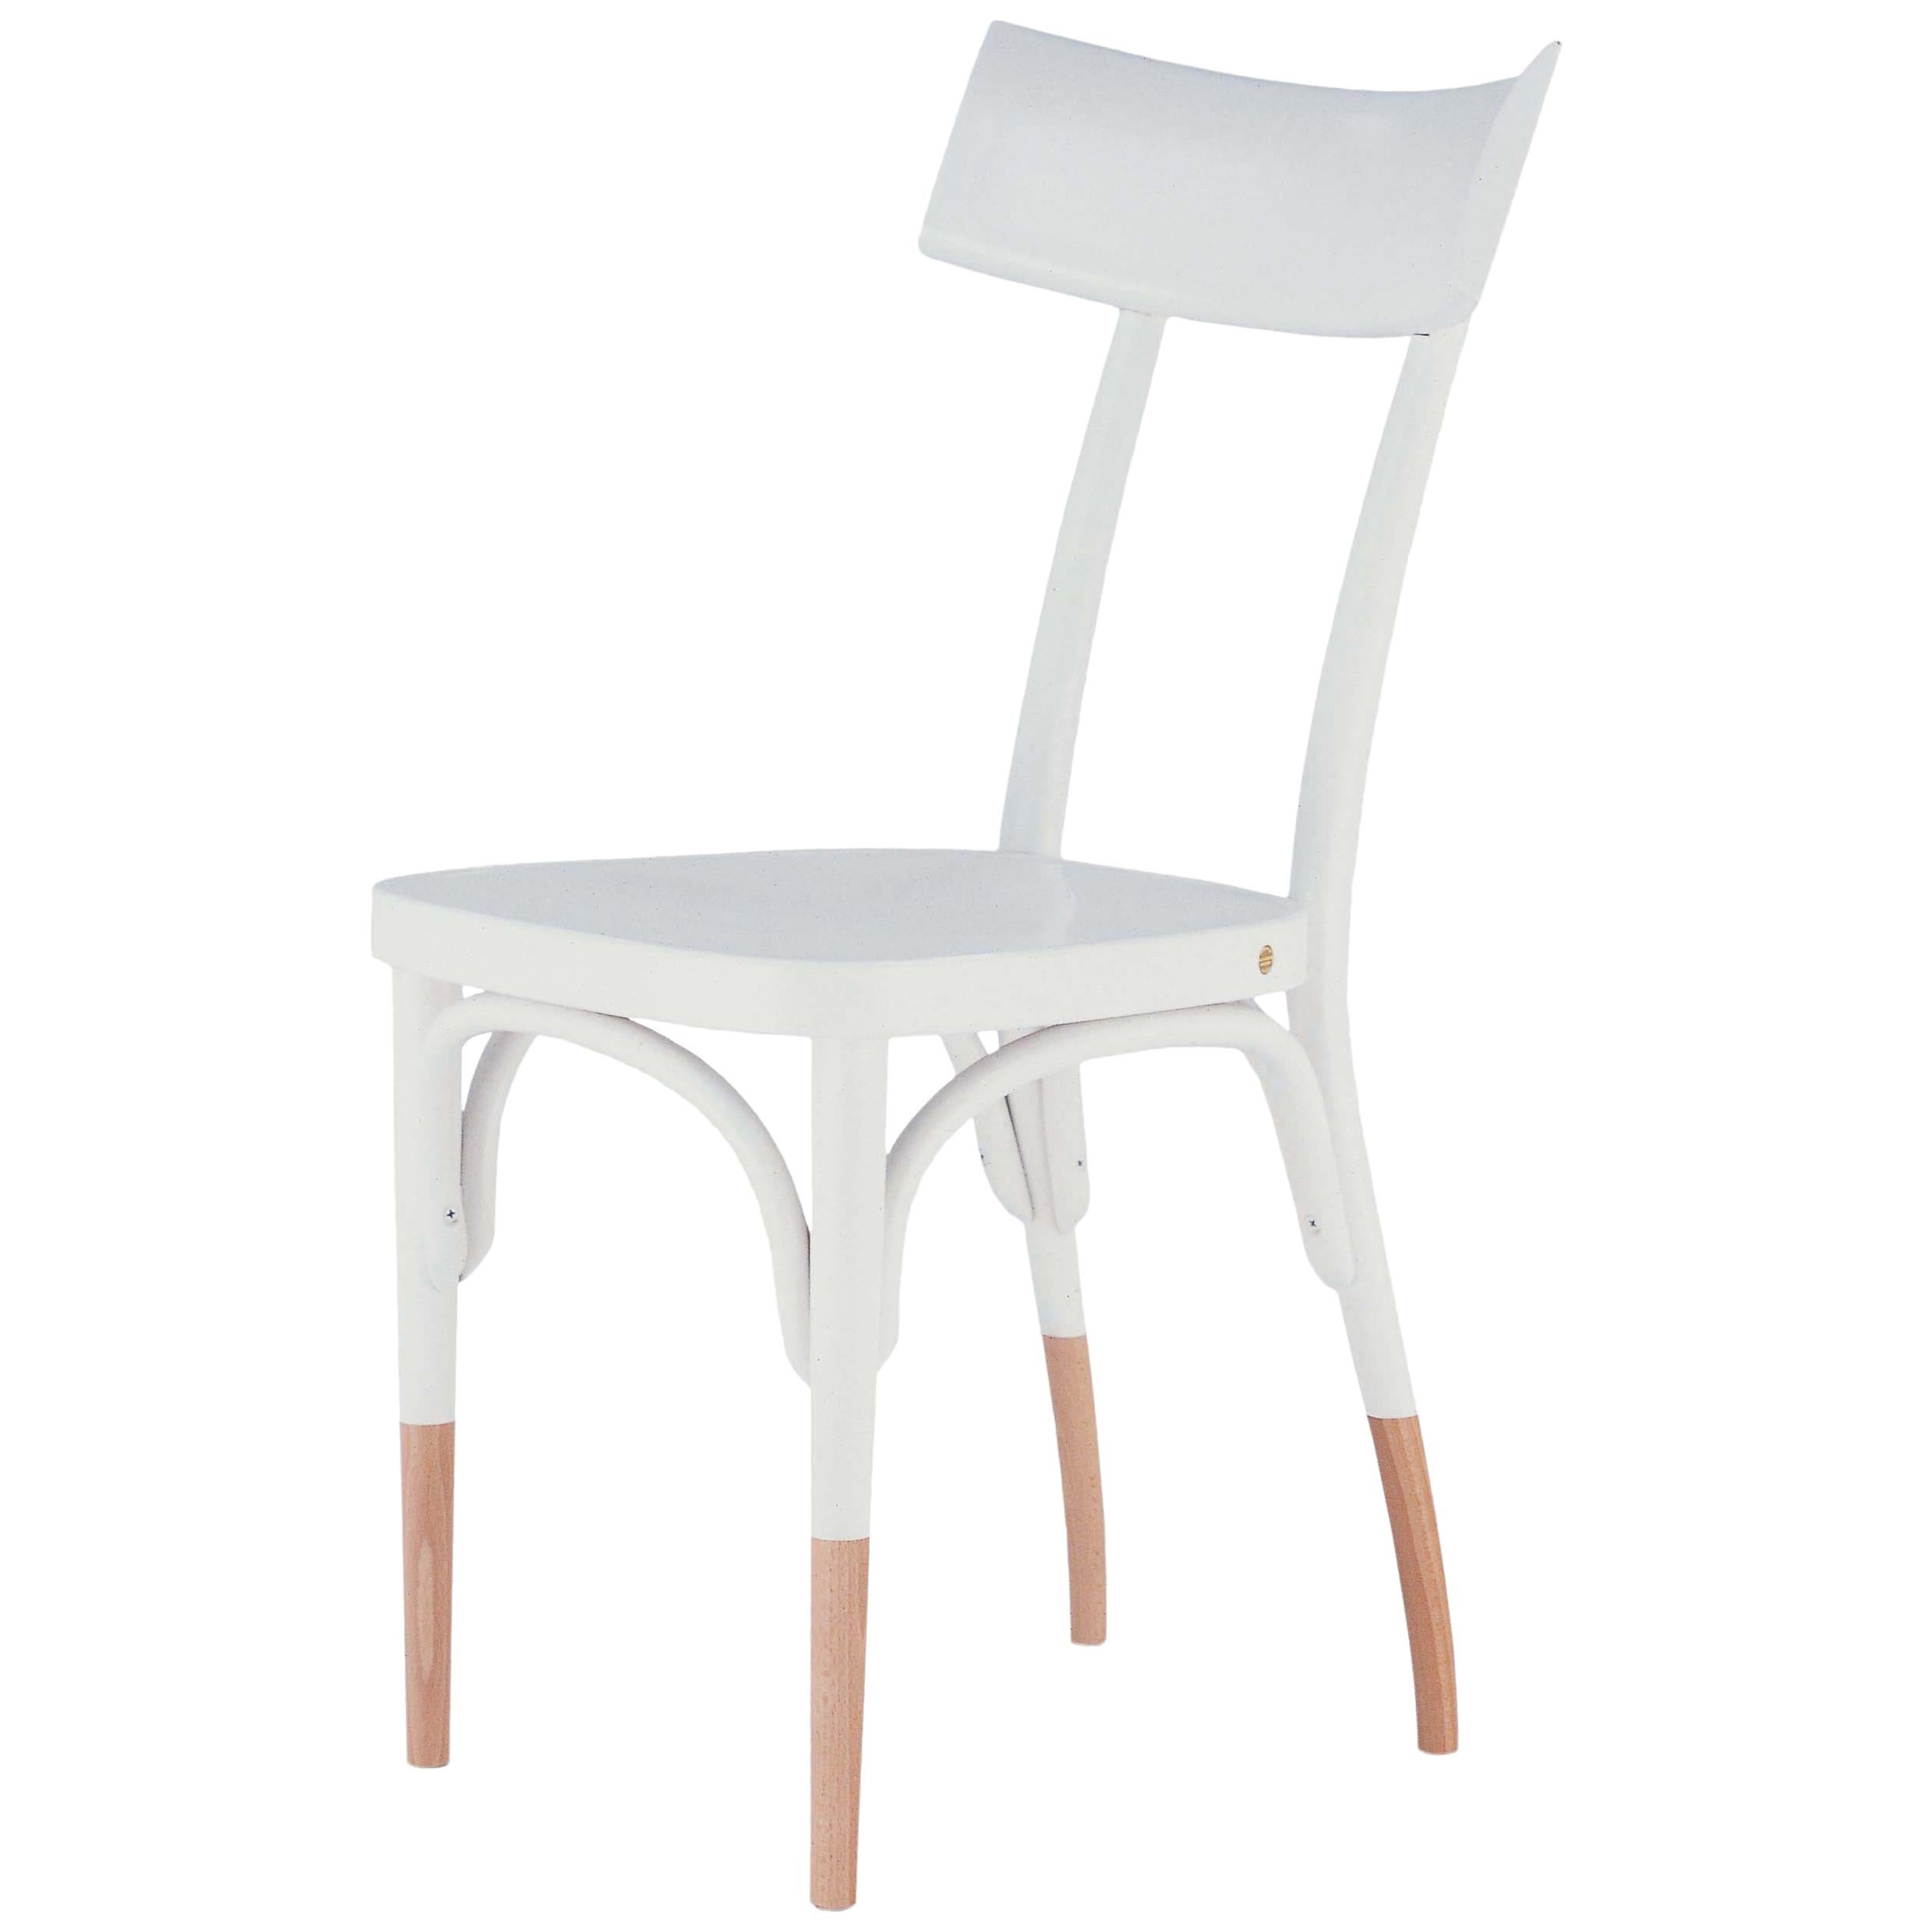 Gebrüder Thonet Vienna GmbH Czech Chair in White Plywood Seat and Beech Feet